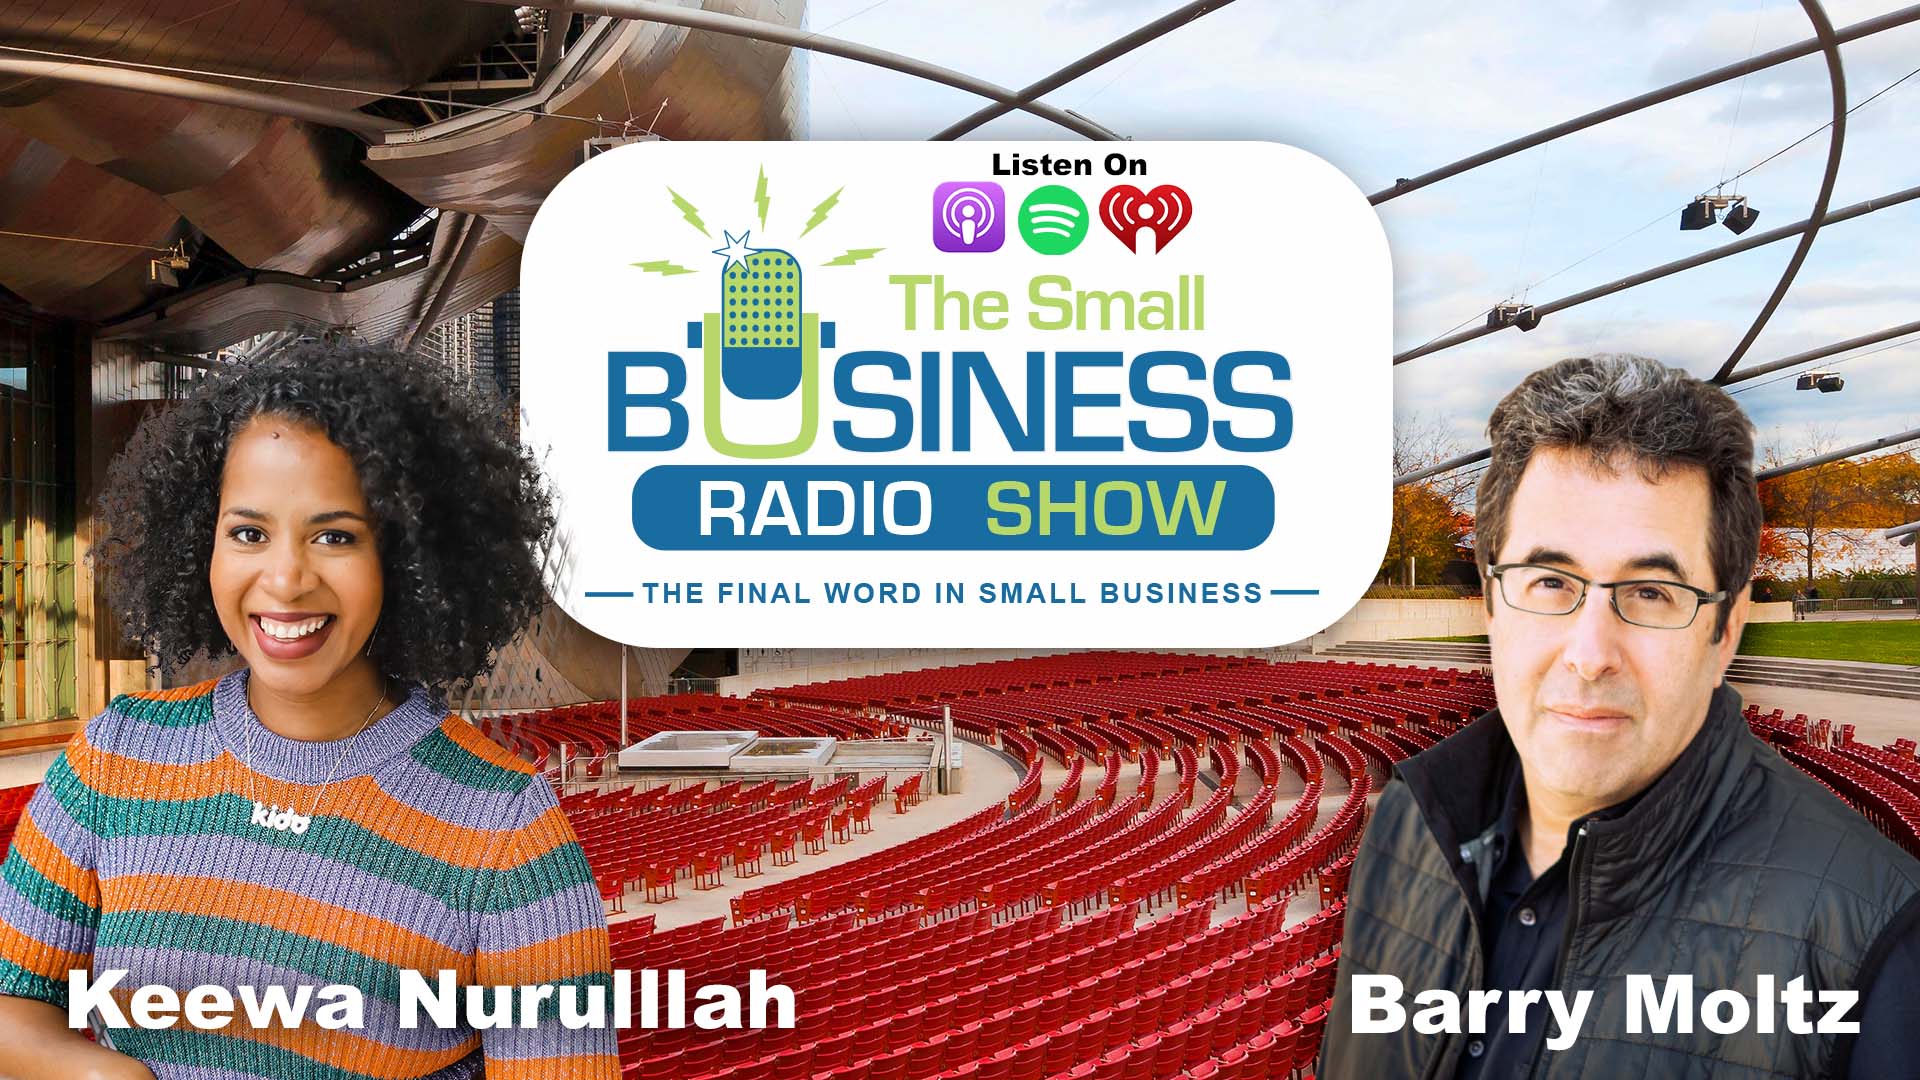 Keewa Nurulllah on The Small Business Radio Show